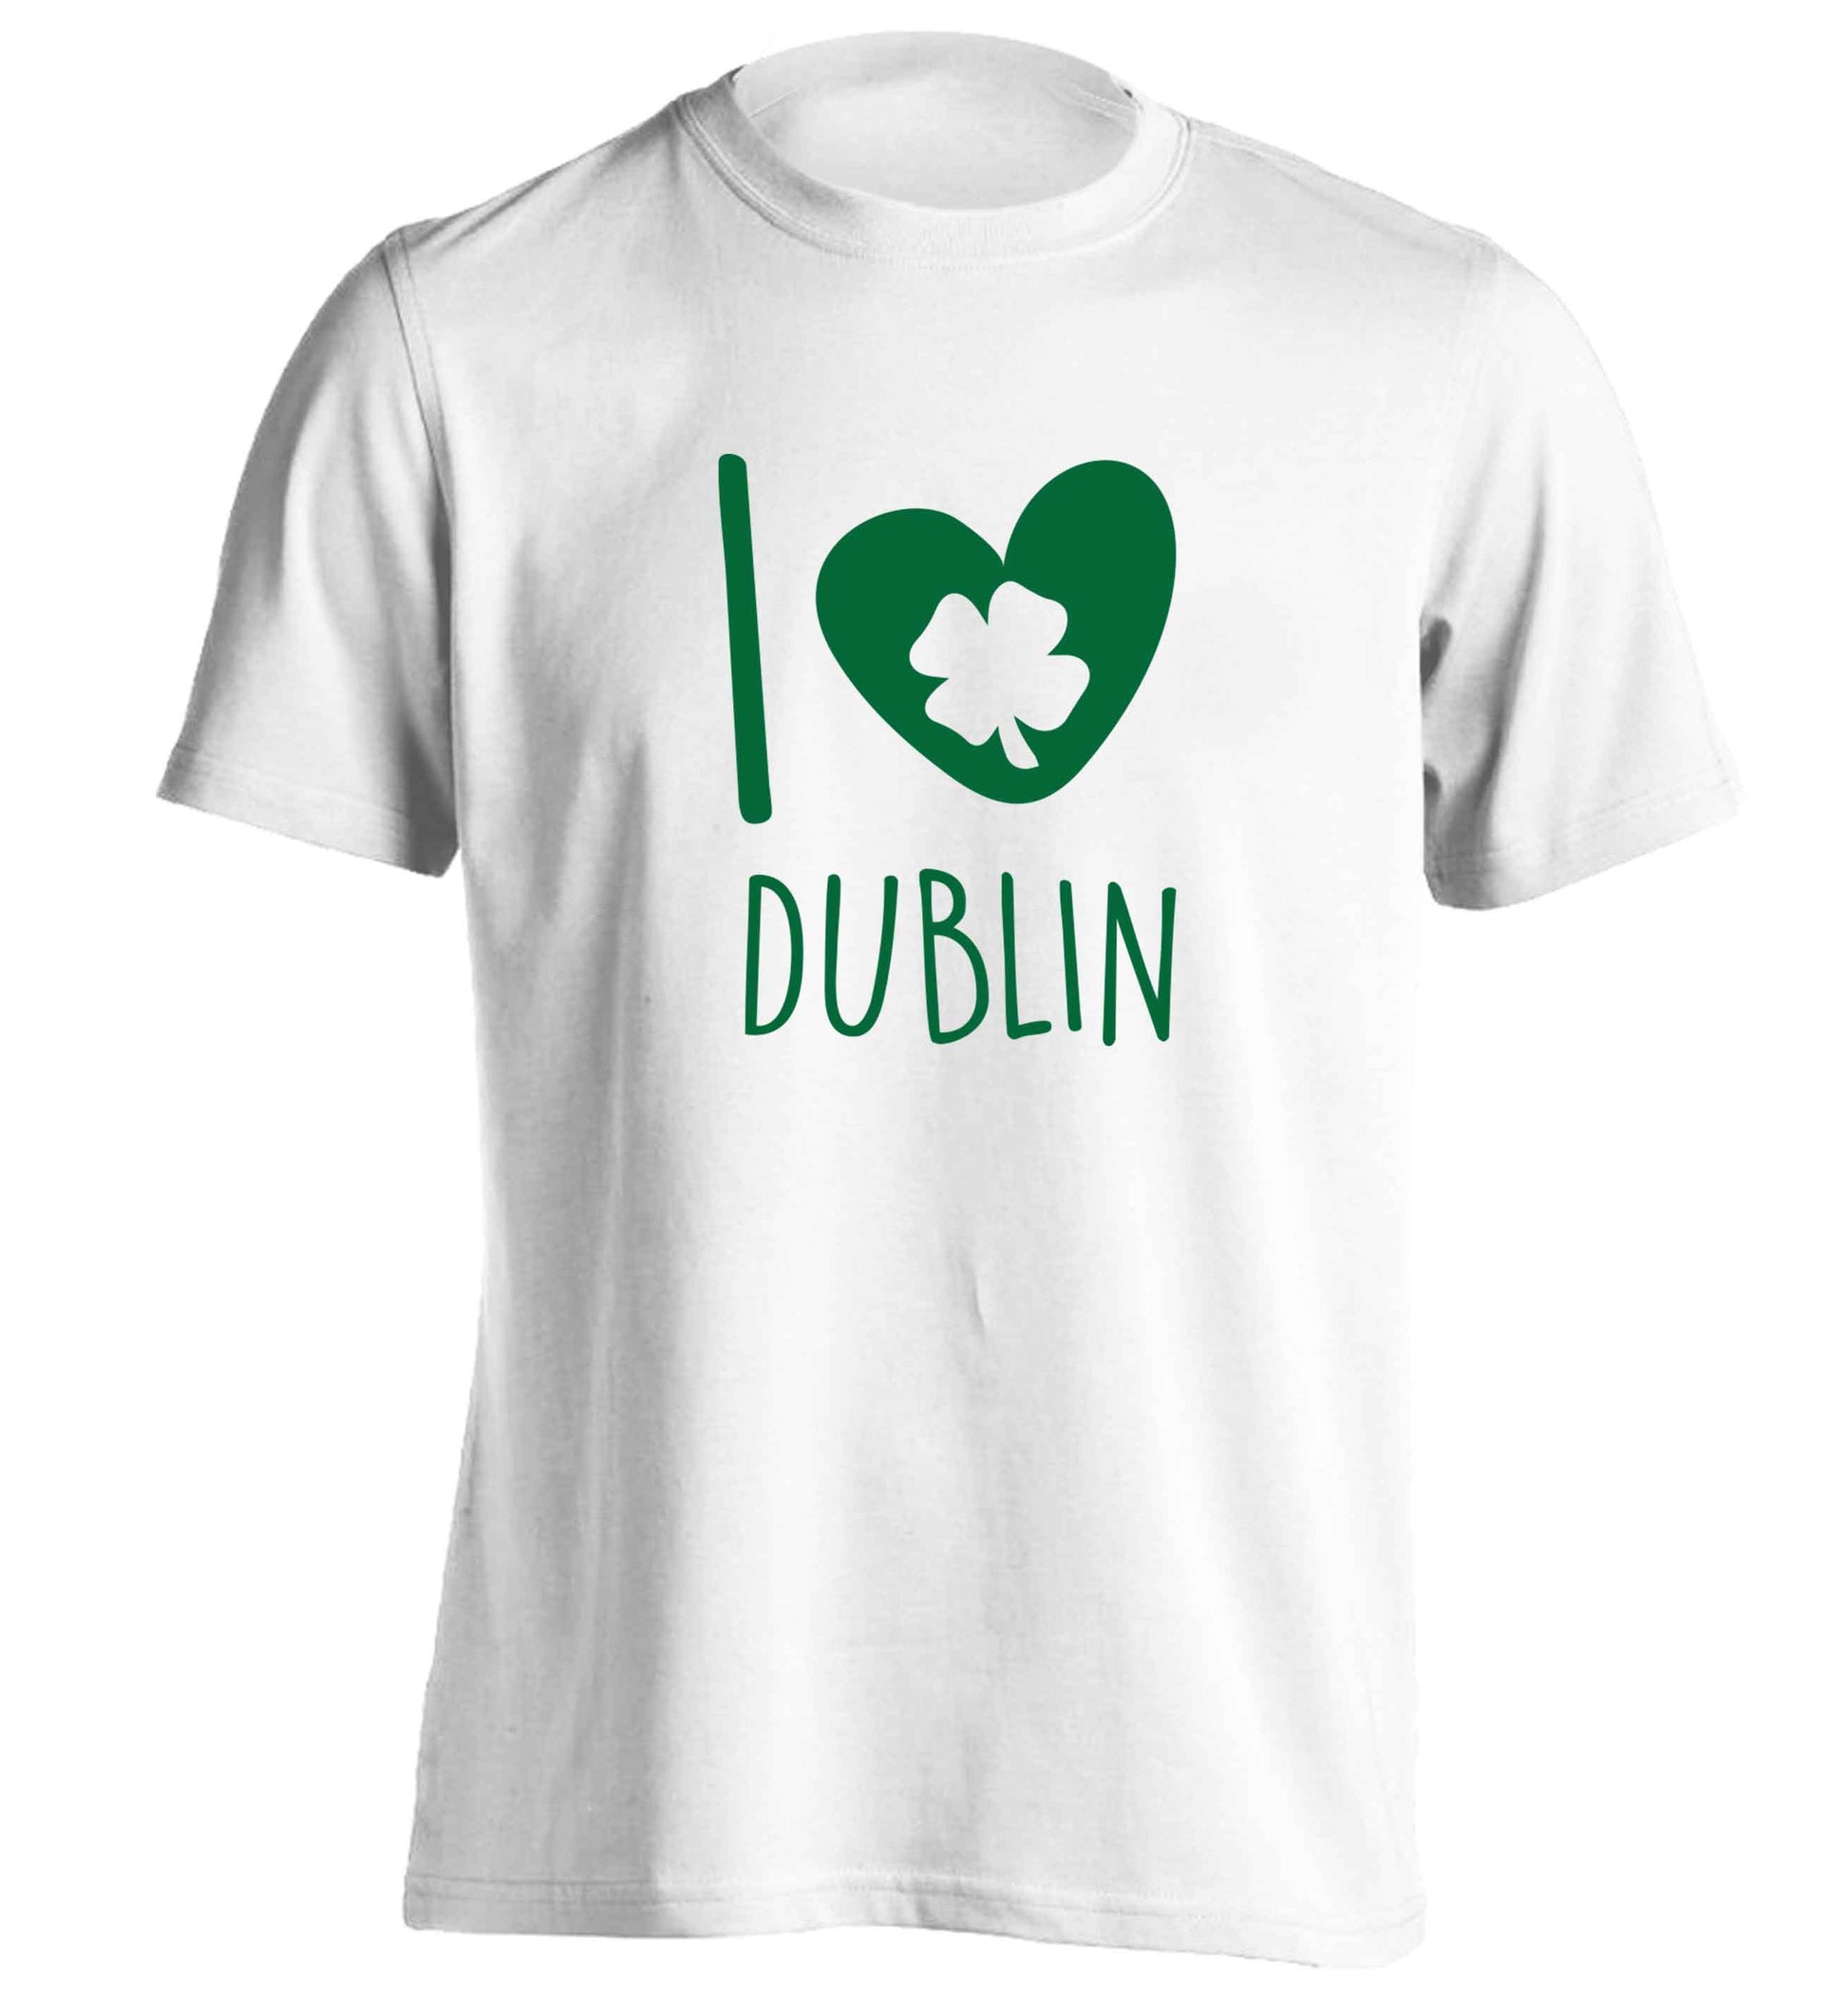 I love Dublin adults unisex white Tshirt 2XL